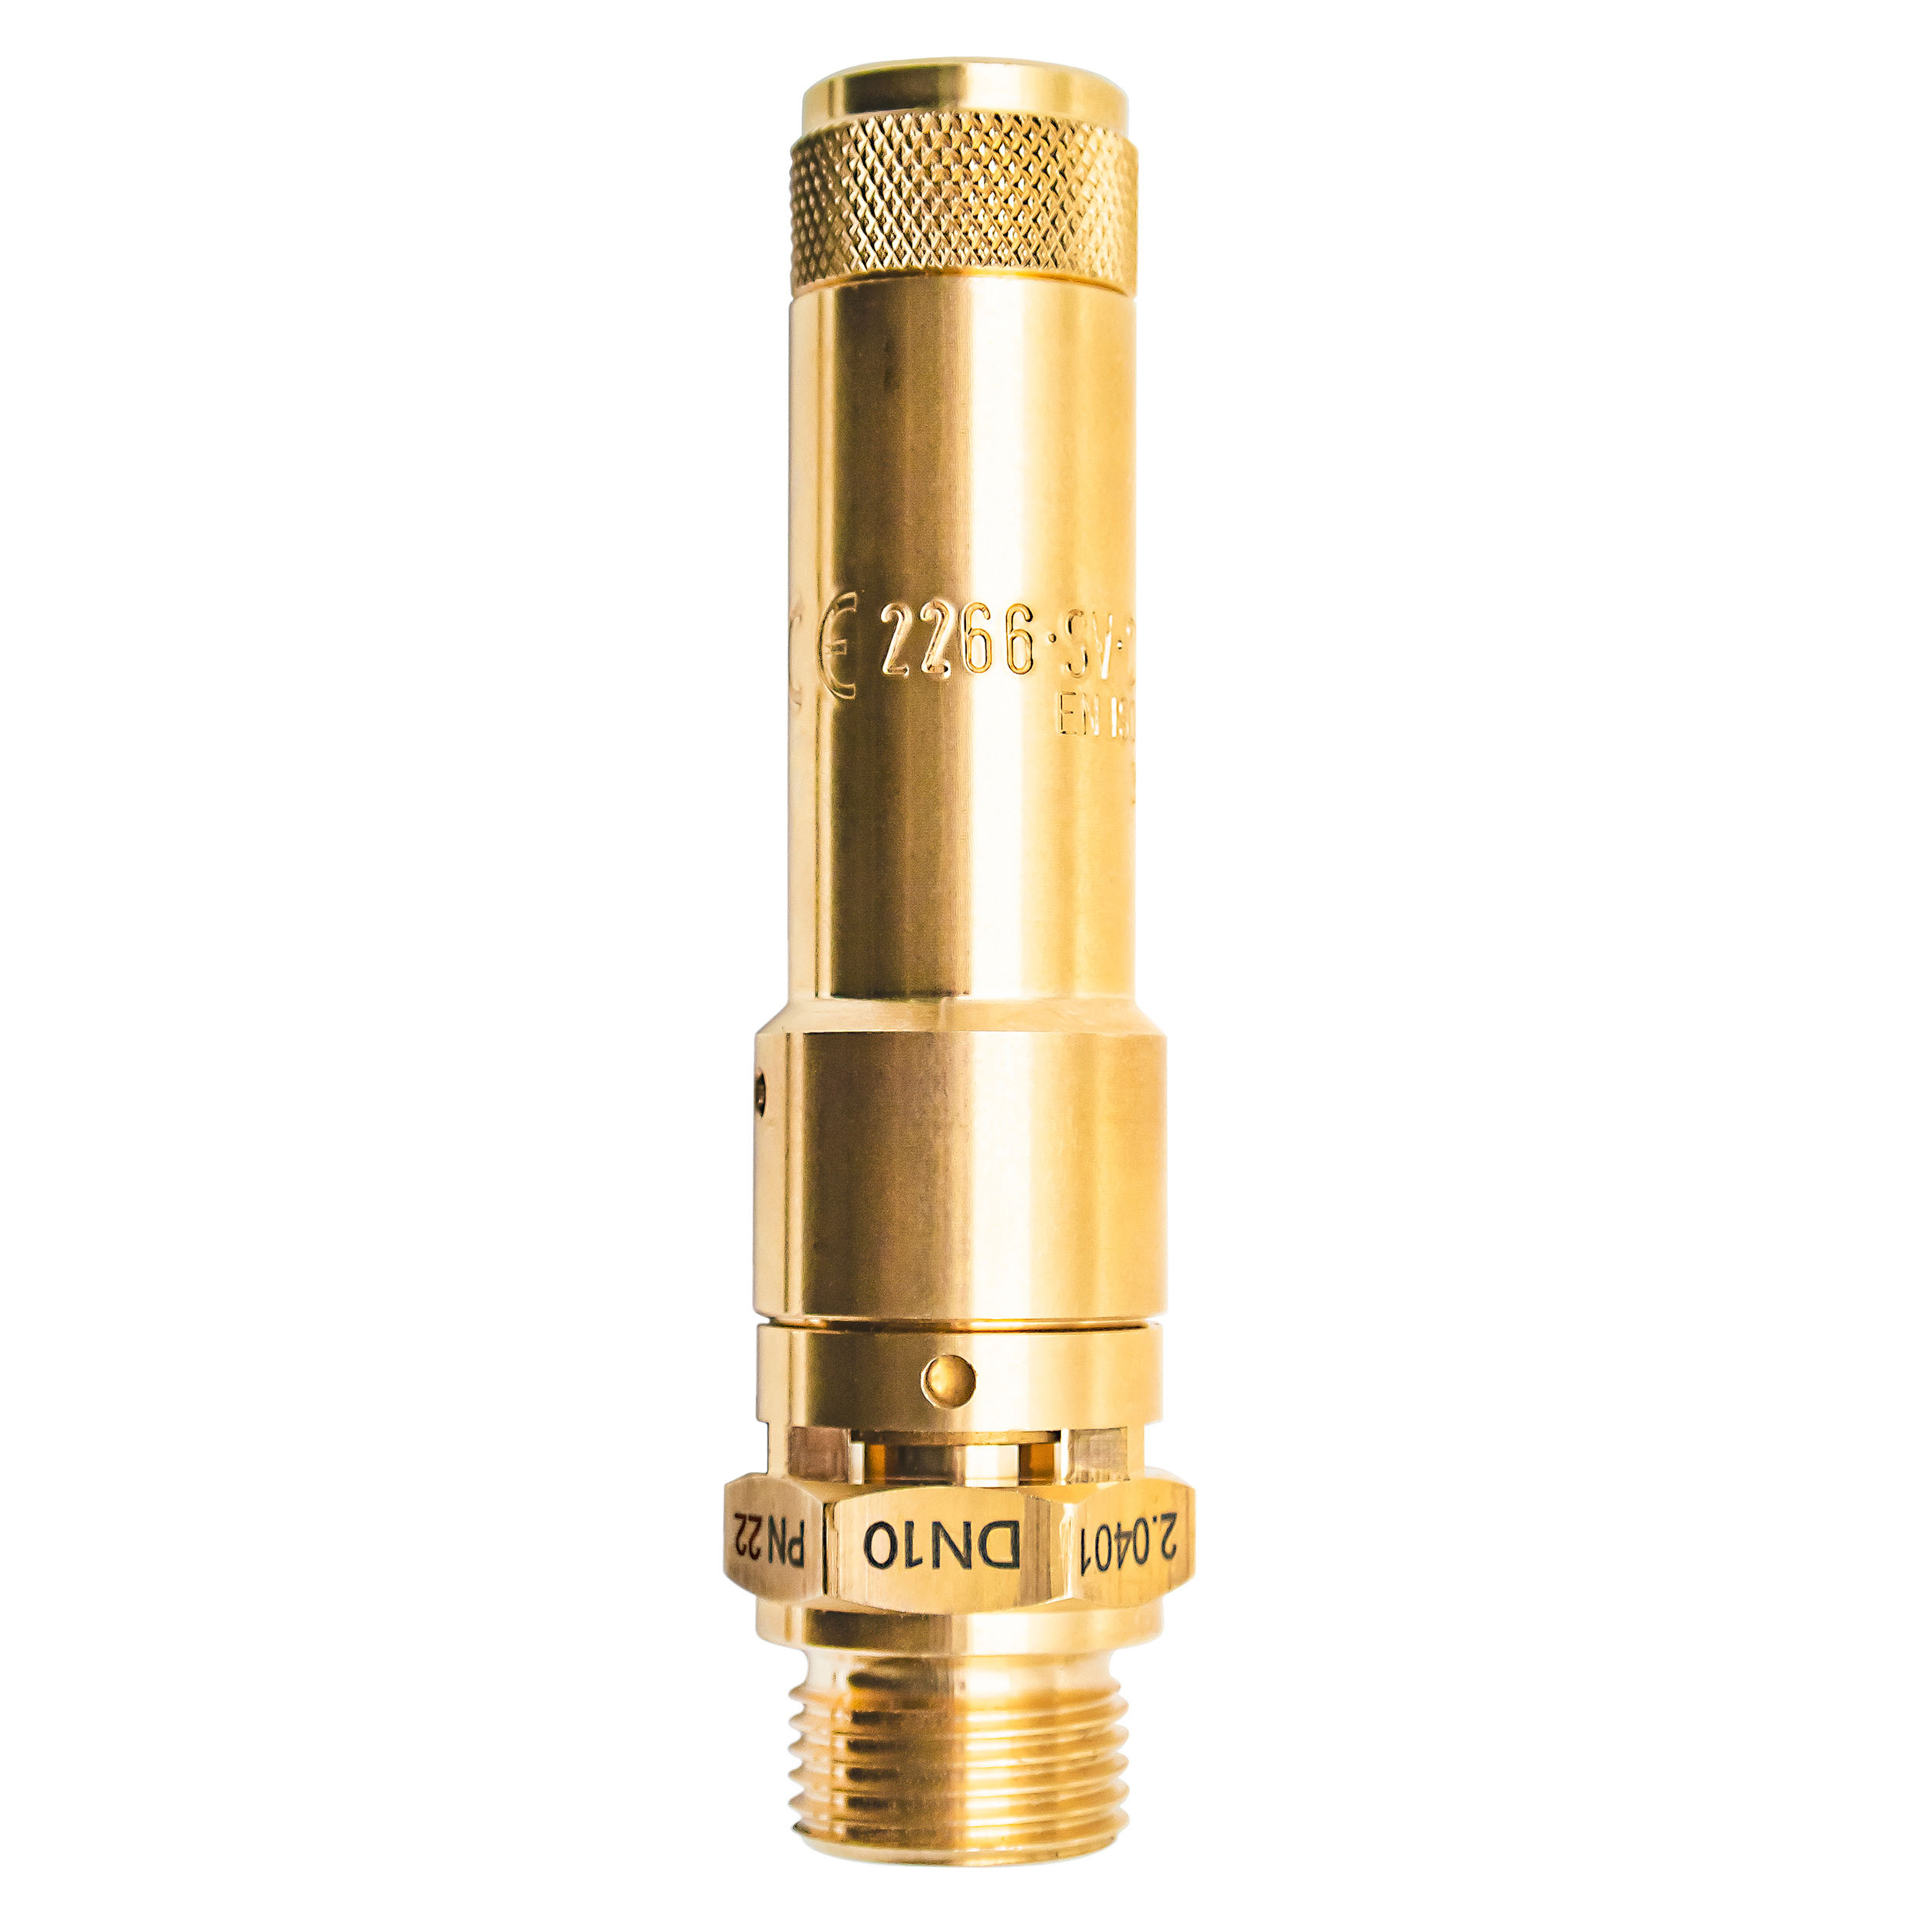 Savety valve component tested DN 10, G½, set pressure: 8.0 bar (116 psi)